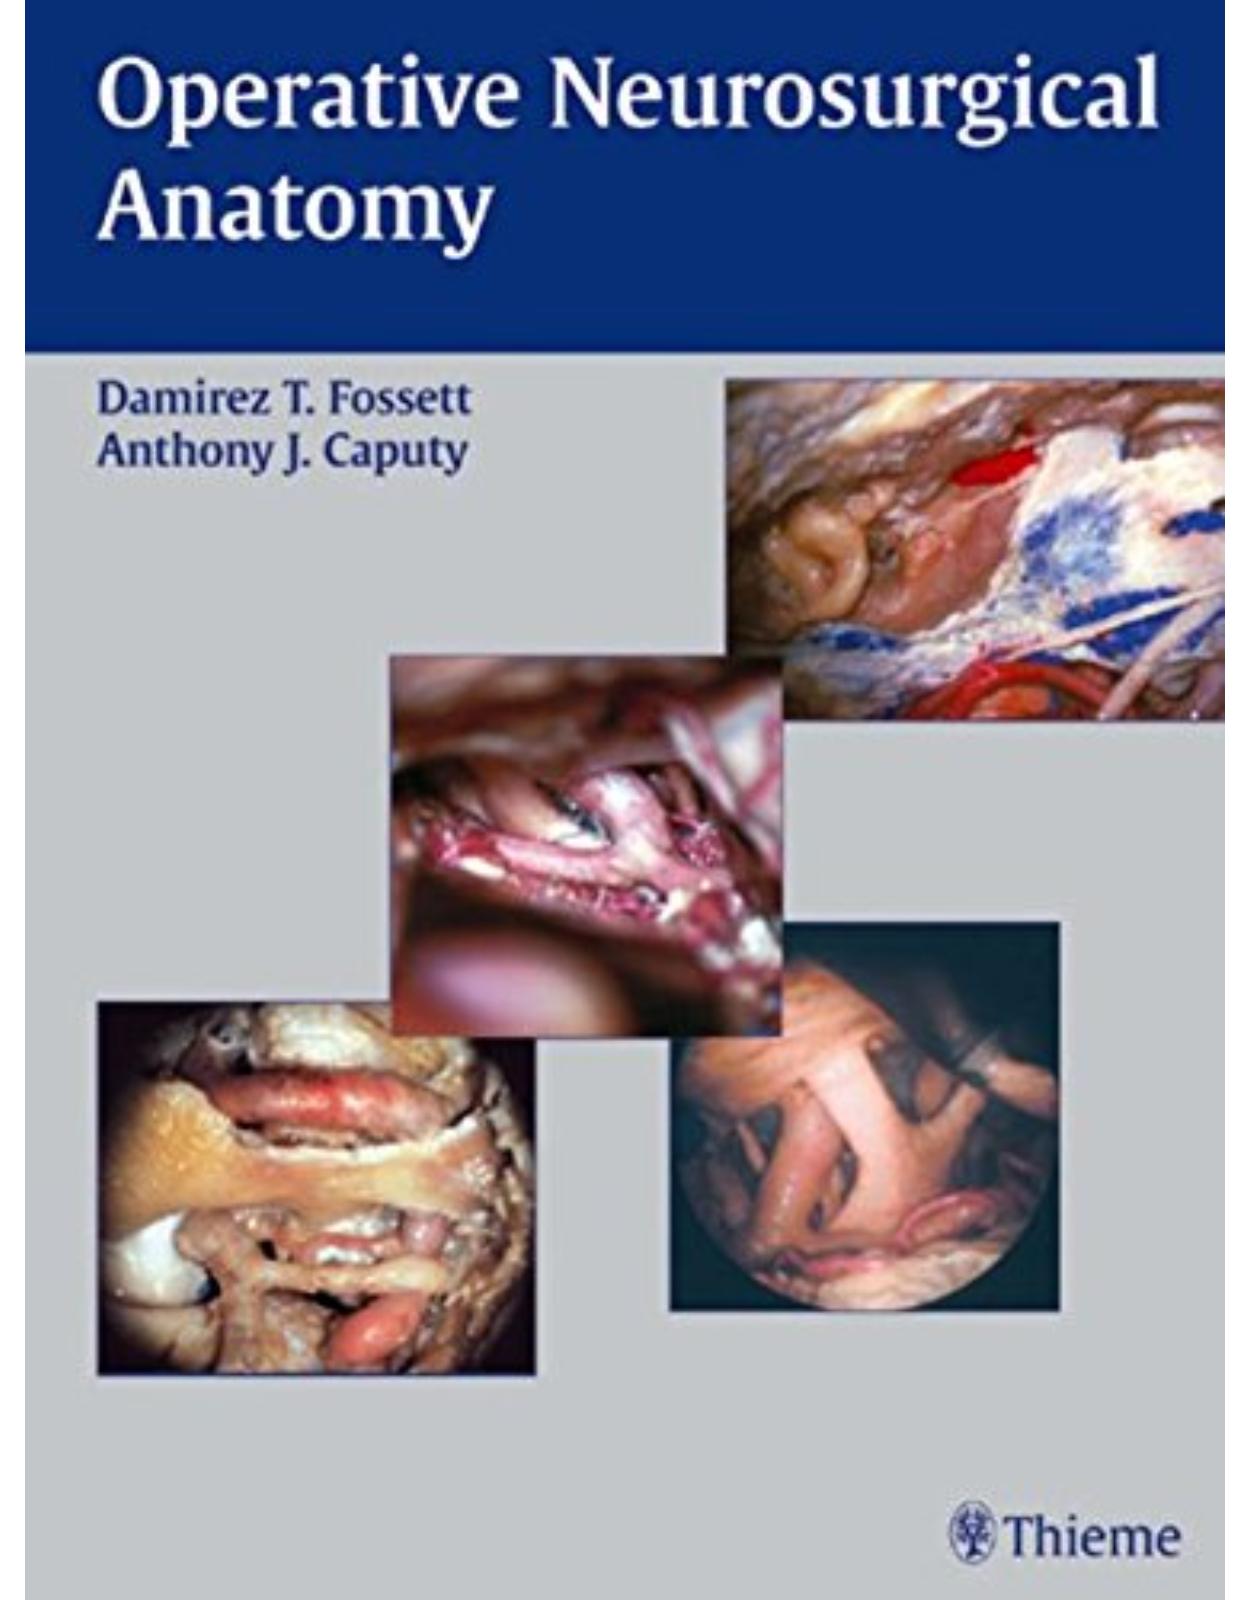  Operative Neurosurgical Anatomy